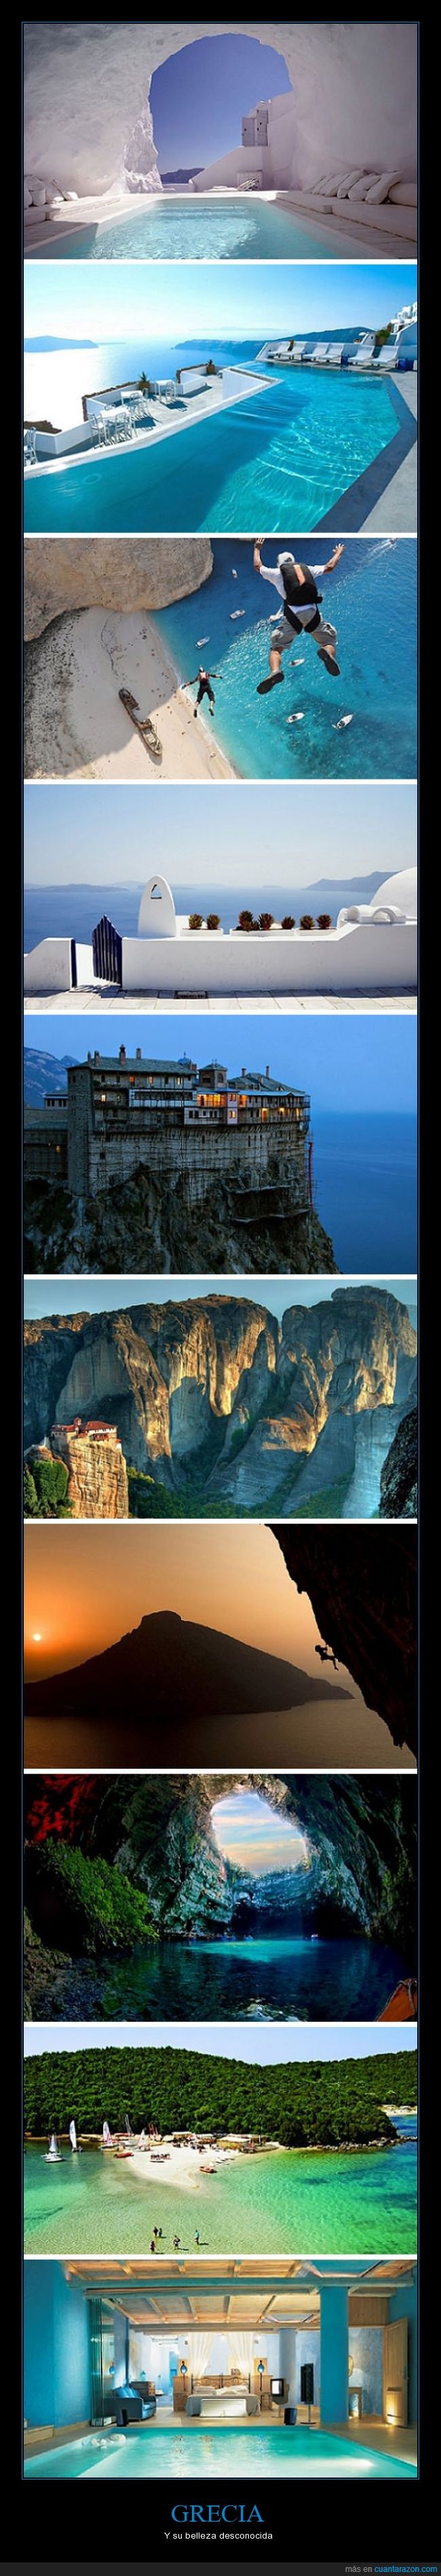 grecia,hotel,agua,vista,mar,azul,paisaje